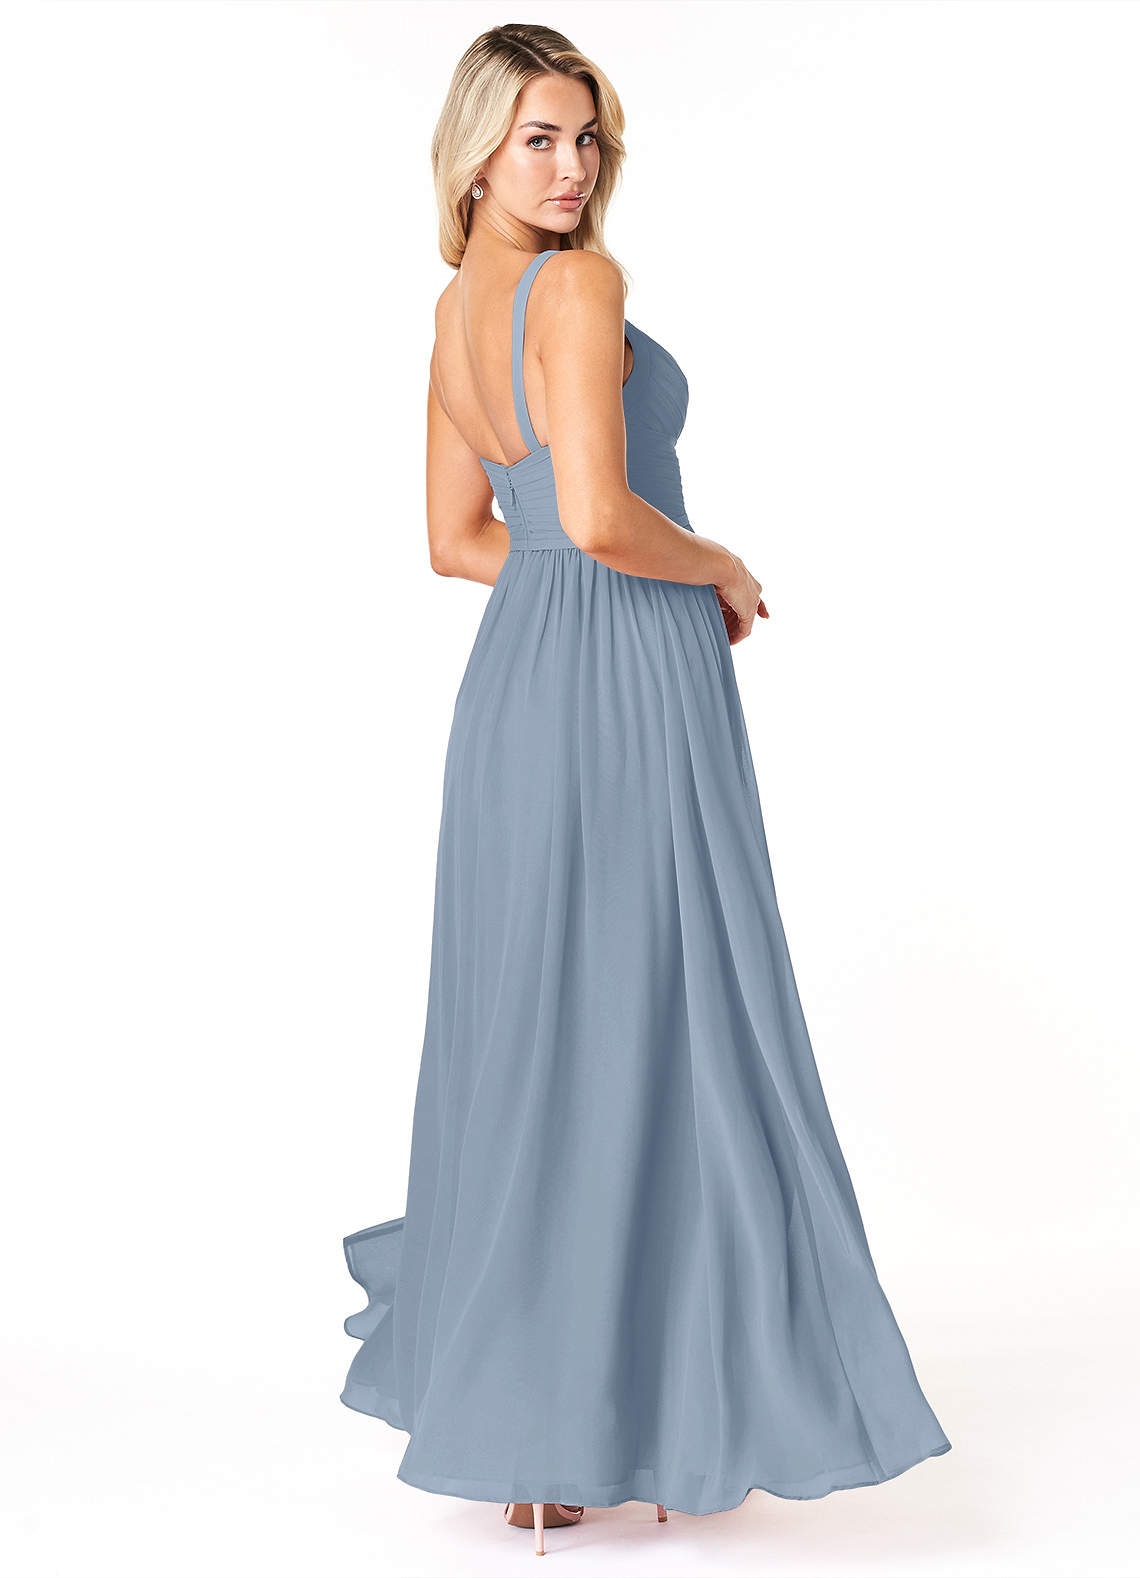 Azazie Chanel Bridesmaid Dresses A-Line Pleated Chiffon Floor-Length Dress image1